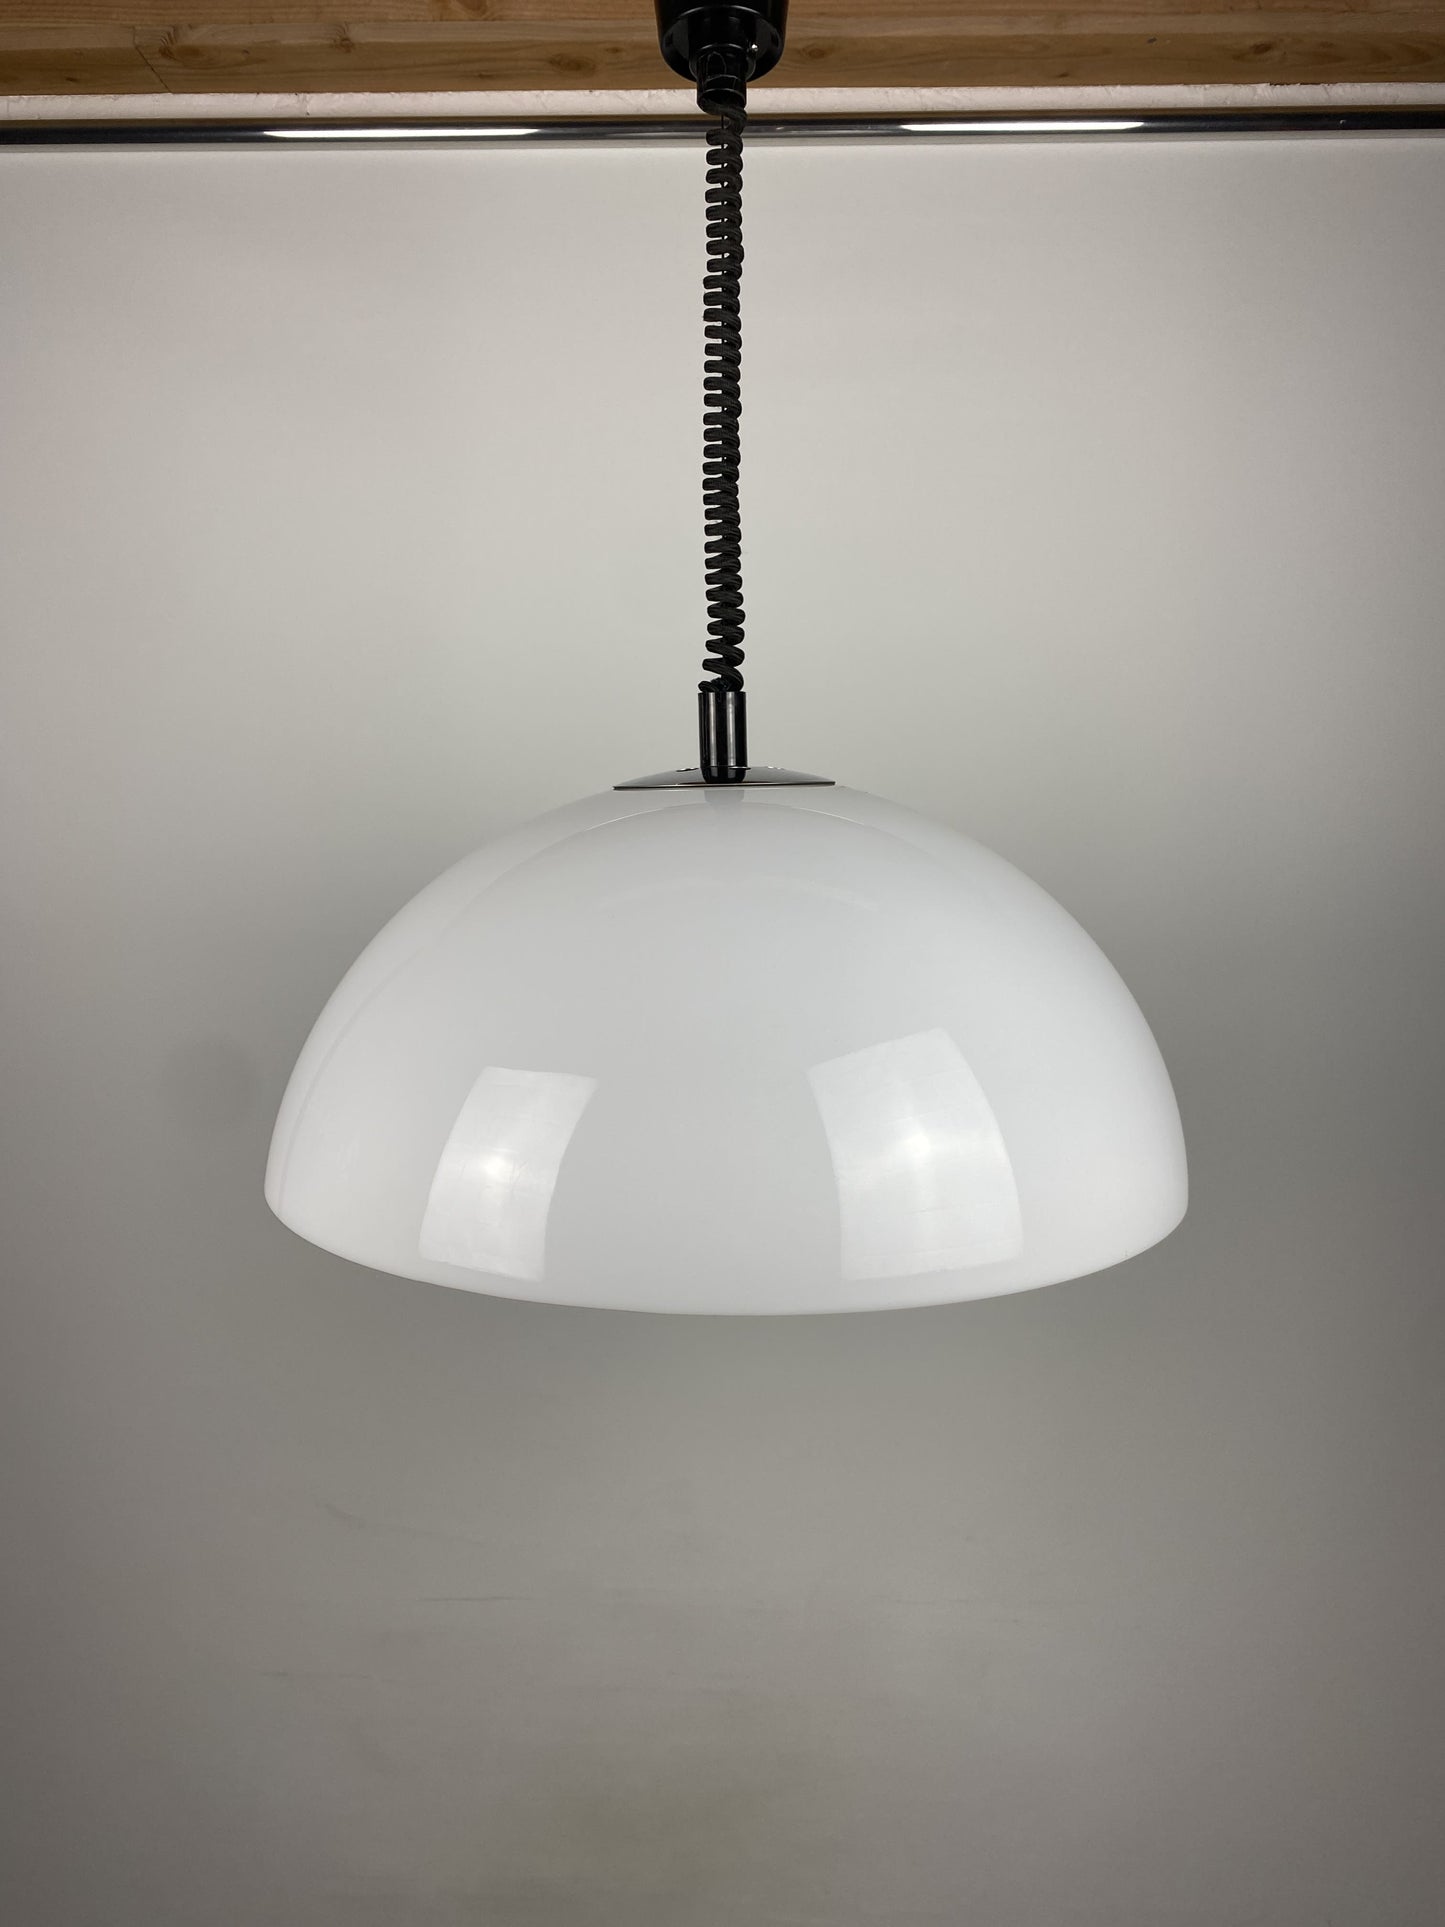 Vintage white plexiglass/acrylic pendant light by GePo Amsterdam XL 1975